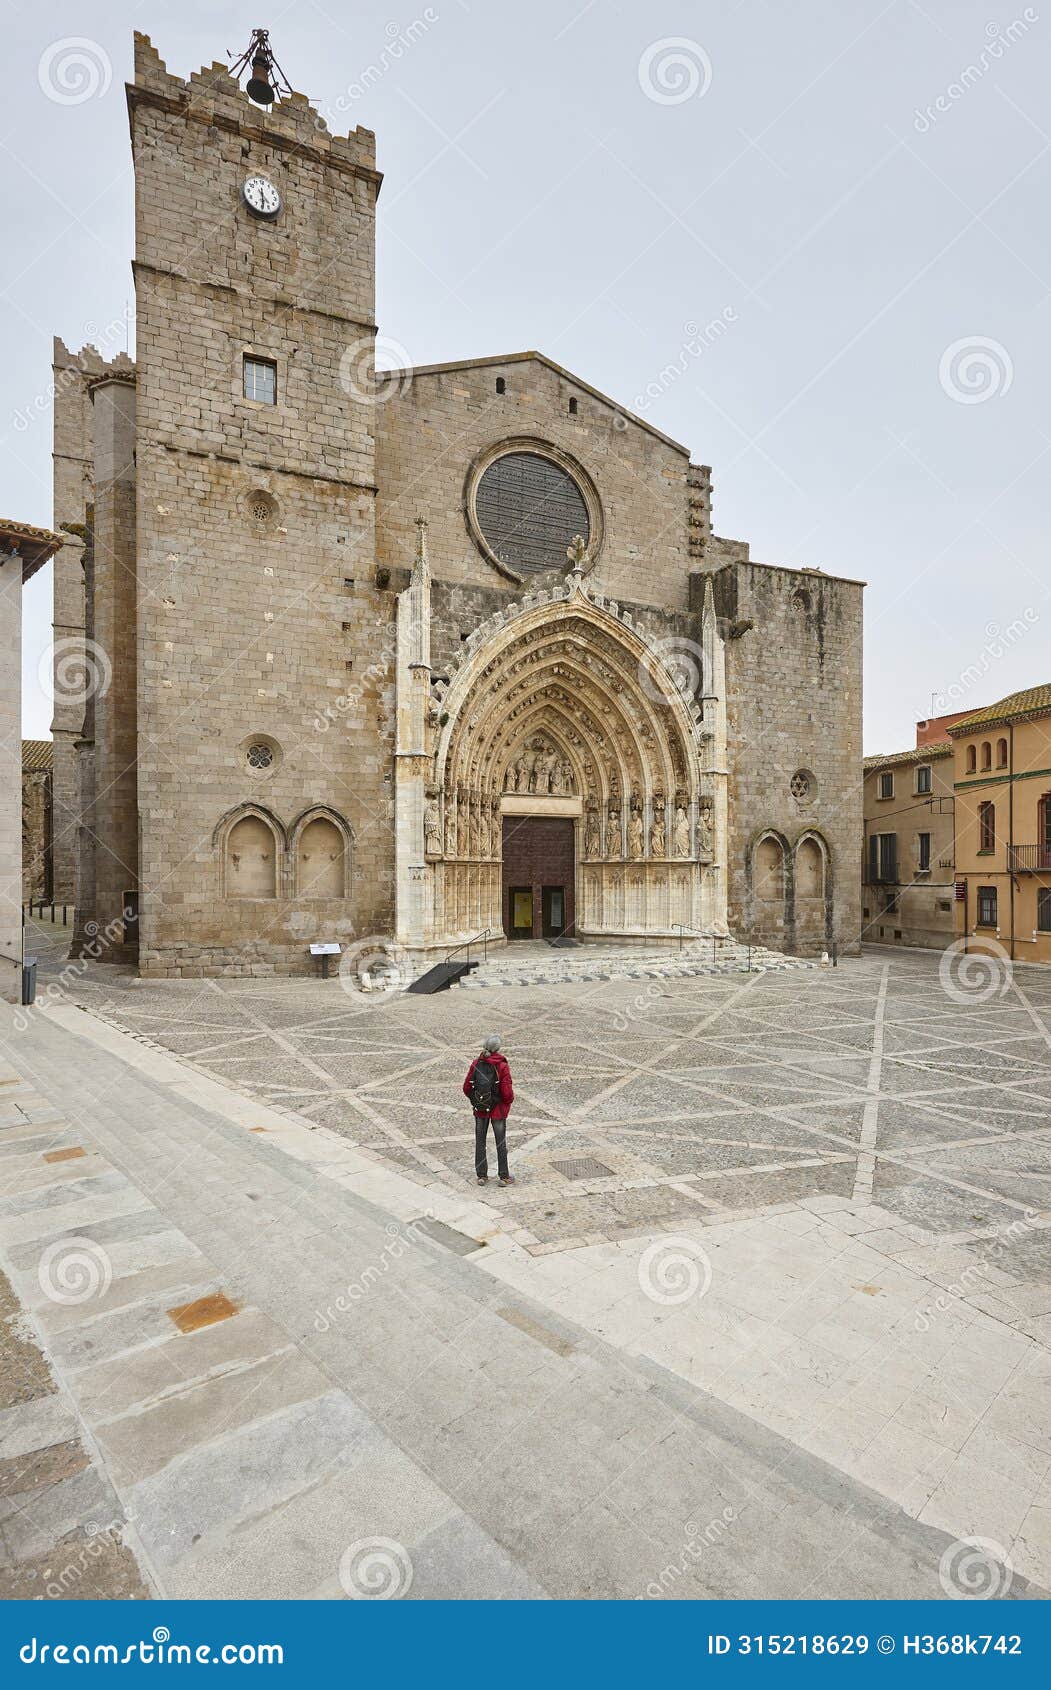 gothic facade church and square. castello de empuries. catalonia, spain